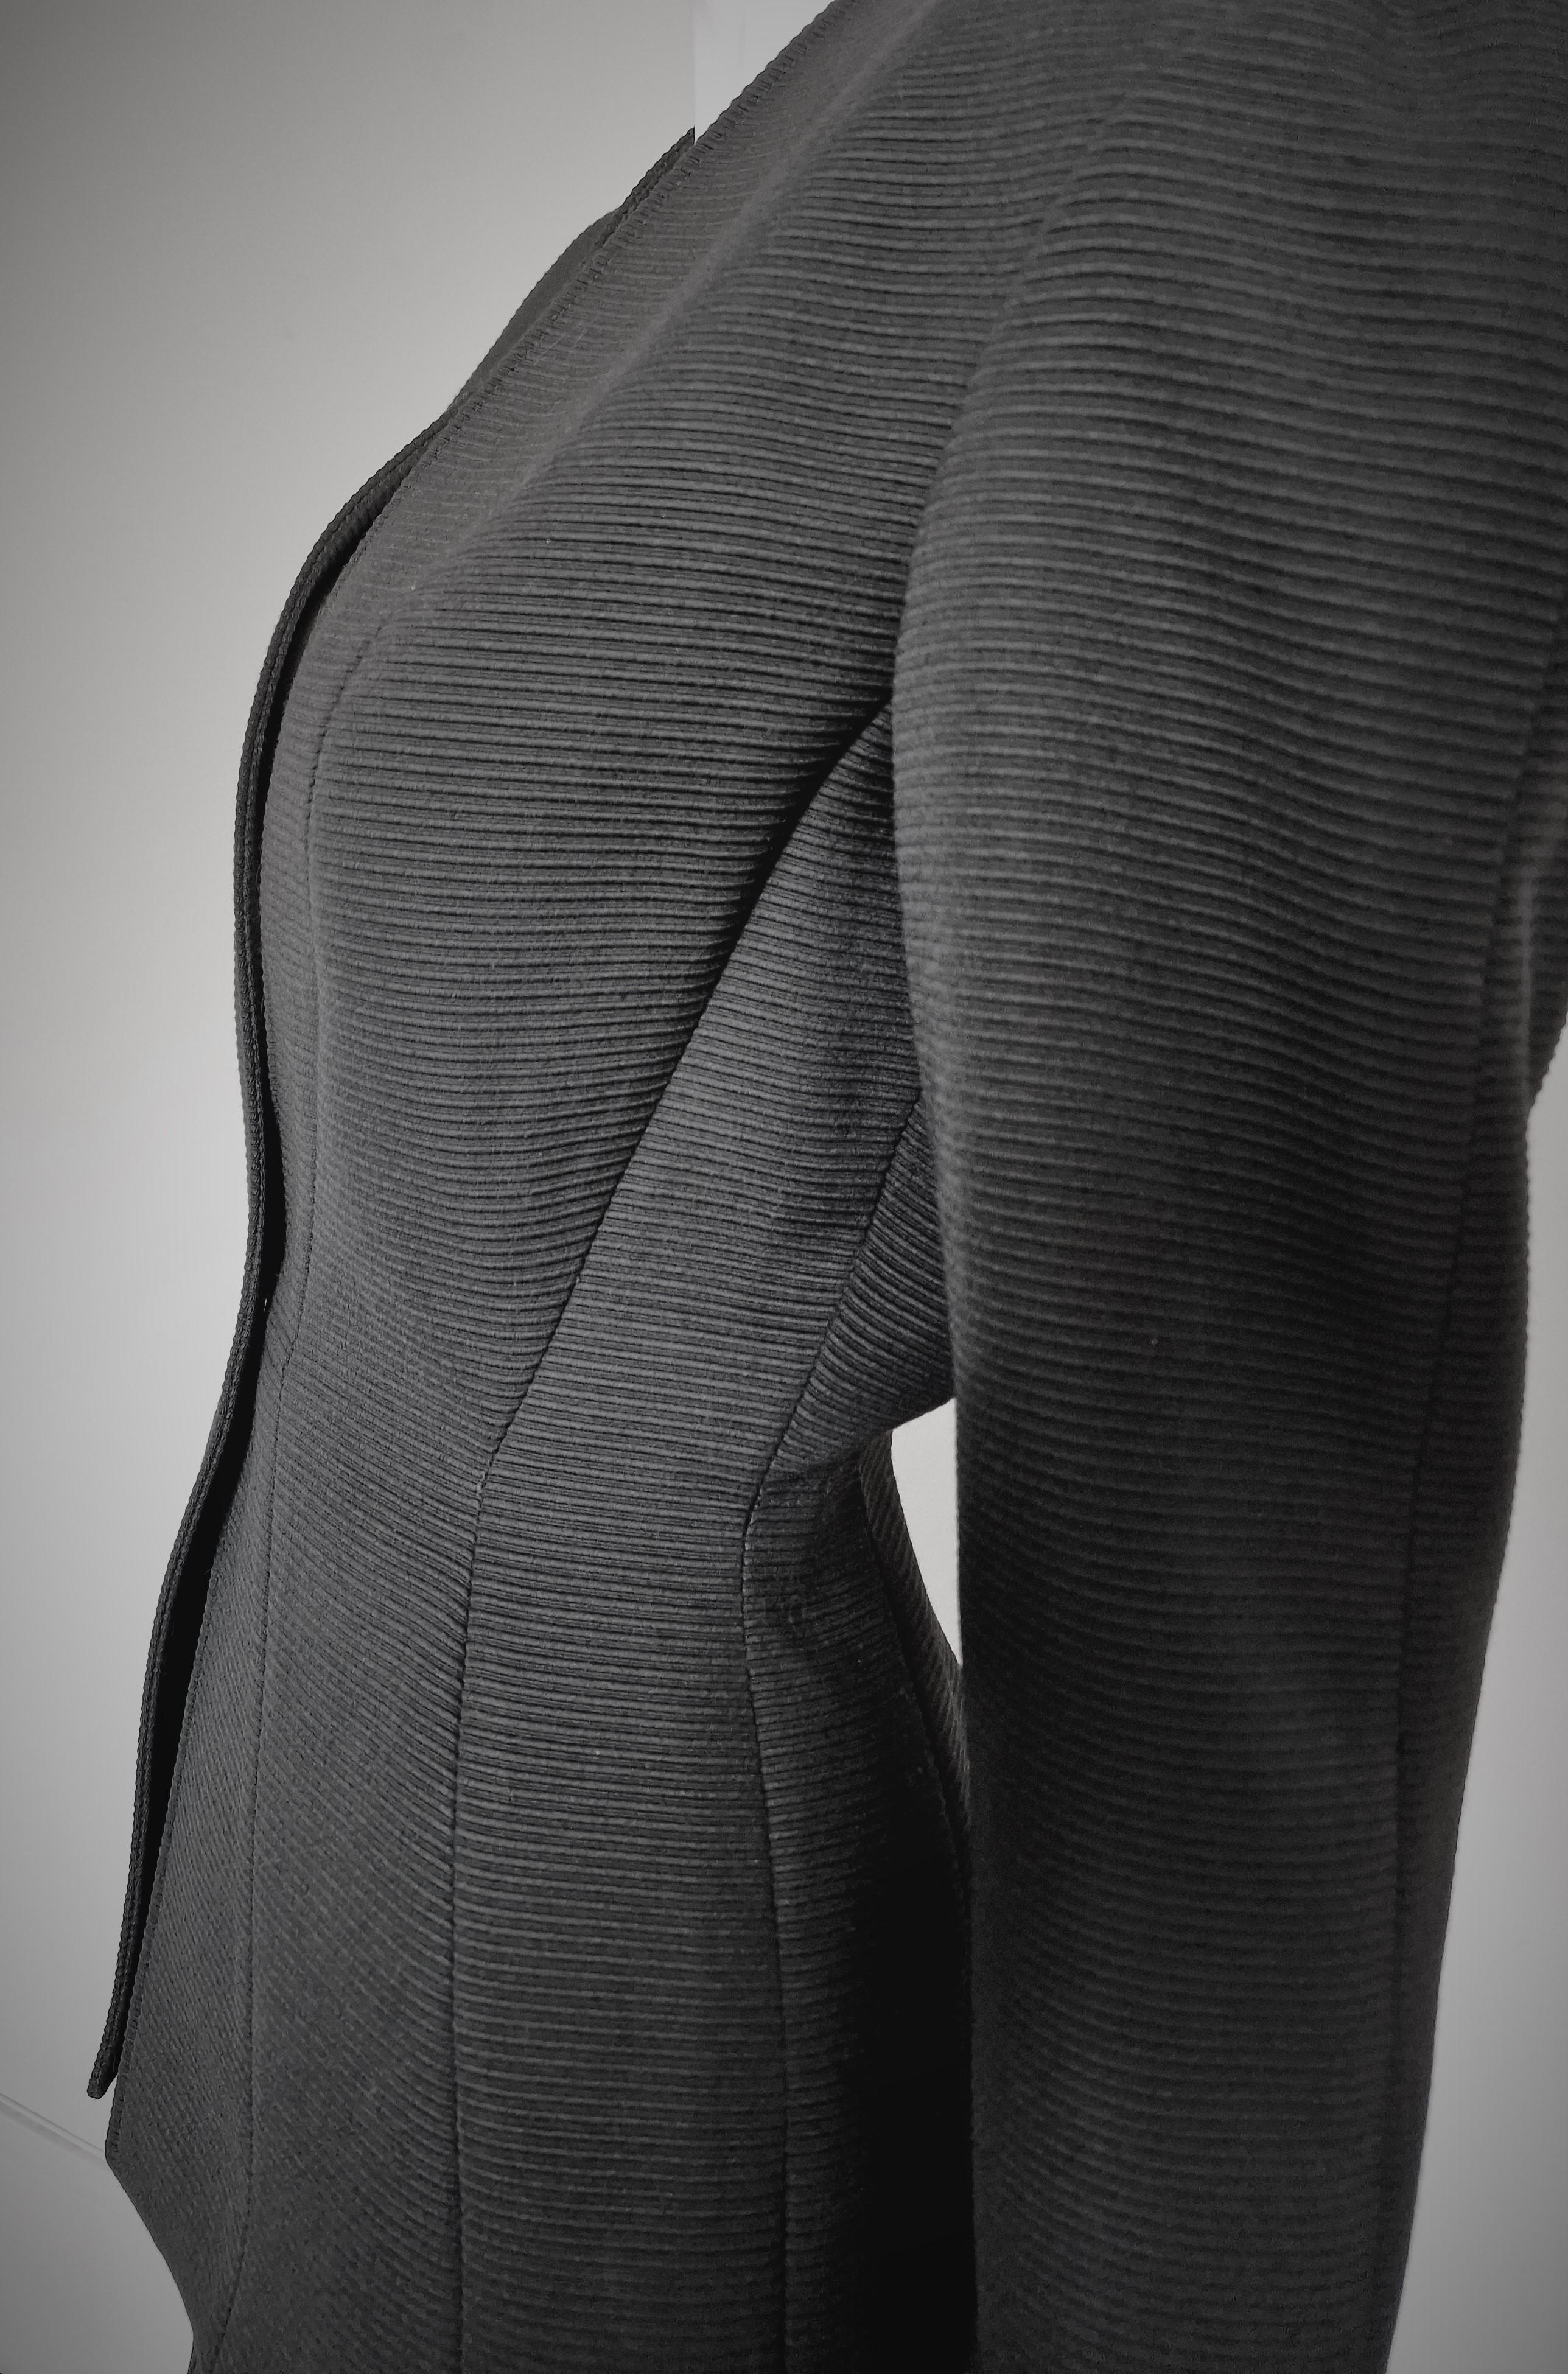 Thierry Mugler Bee Wasp Waist Black Couture Medium Ensemble Blazer Skirt Suit 4